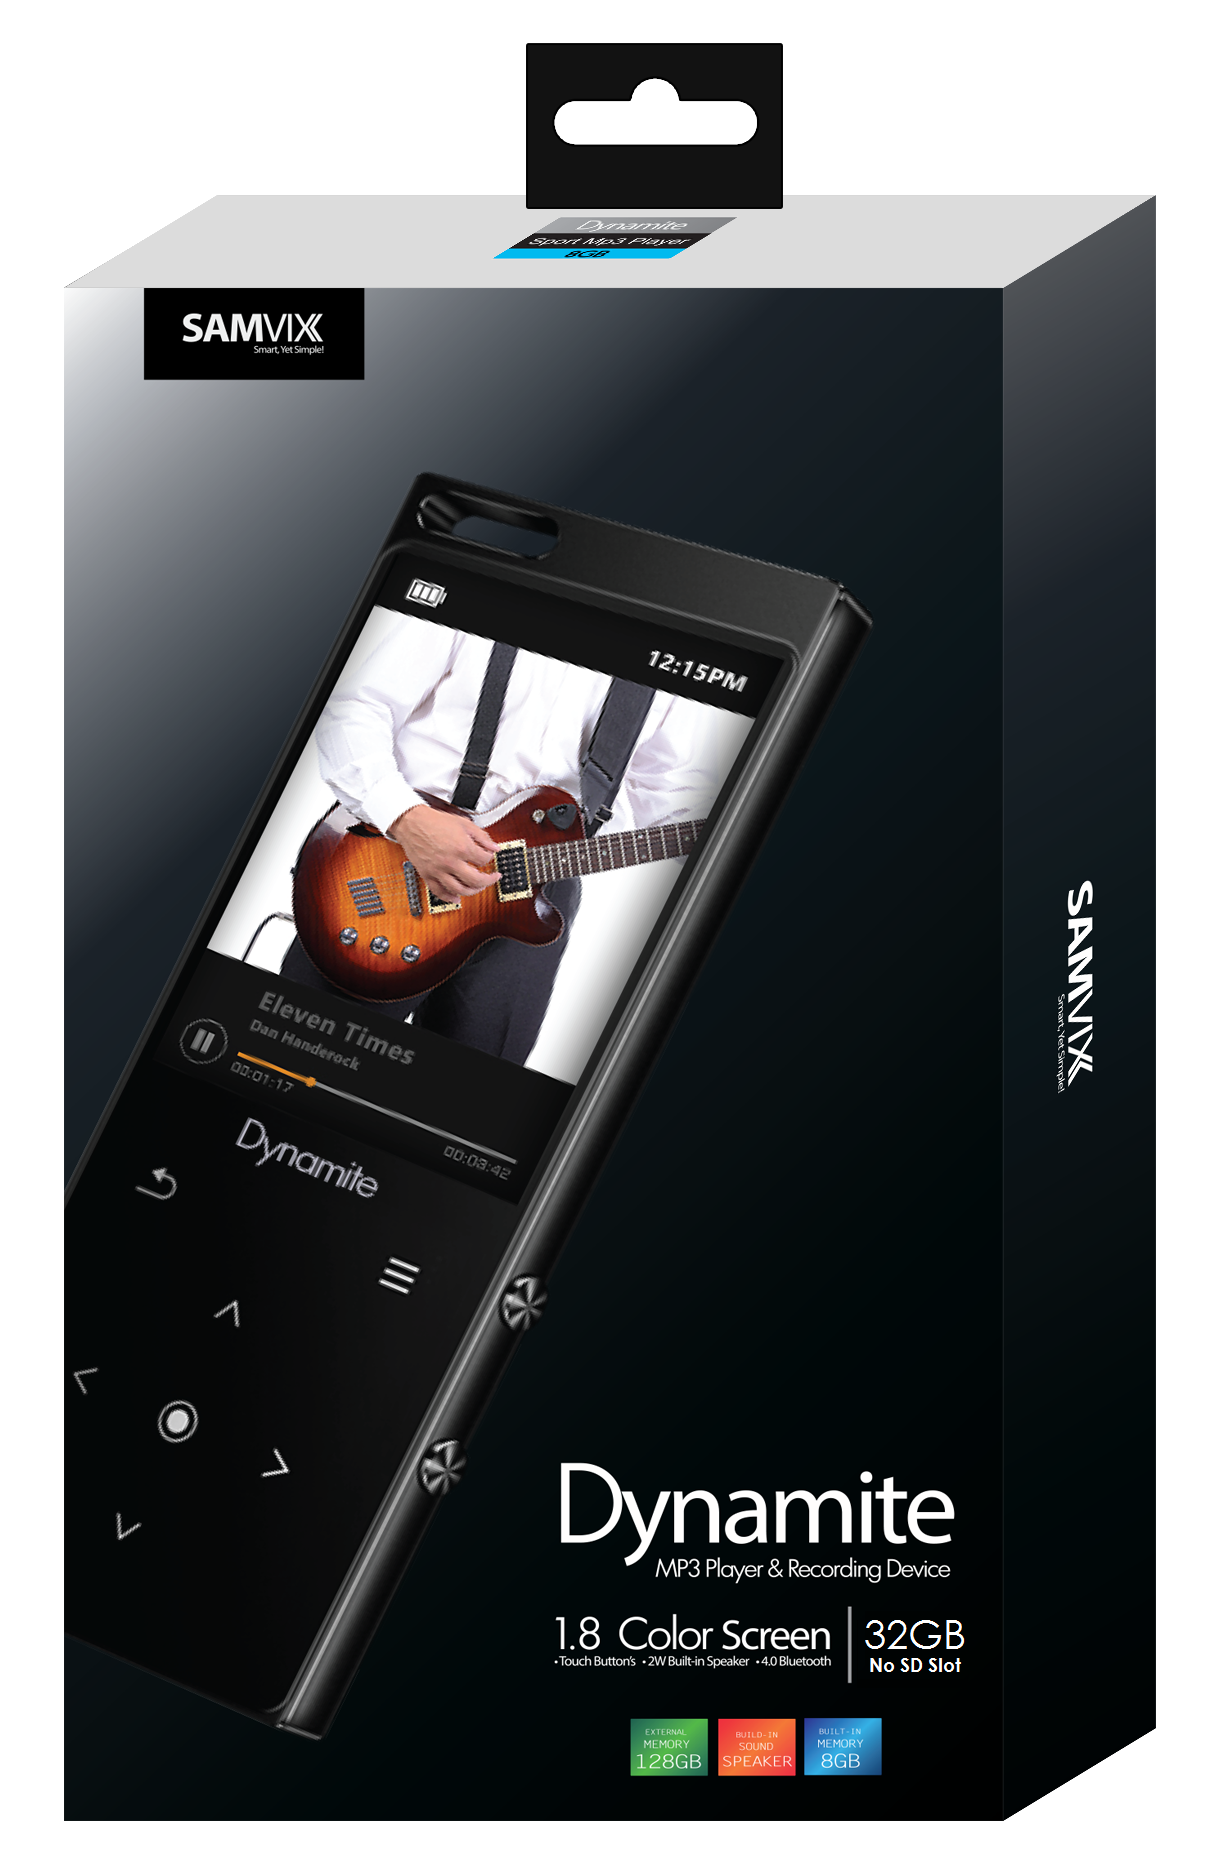 Samvix - Dynamite 32GB (NO SD SLOT) Kosher MP3 Player, Black